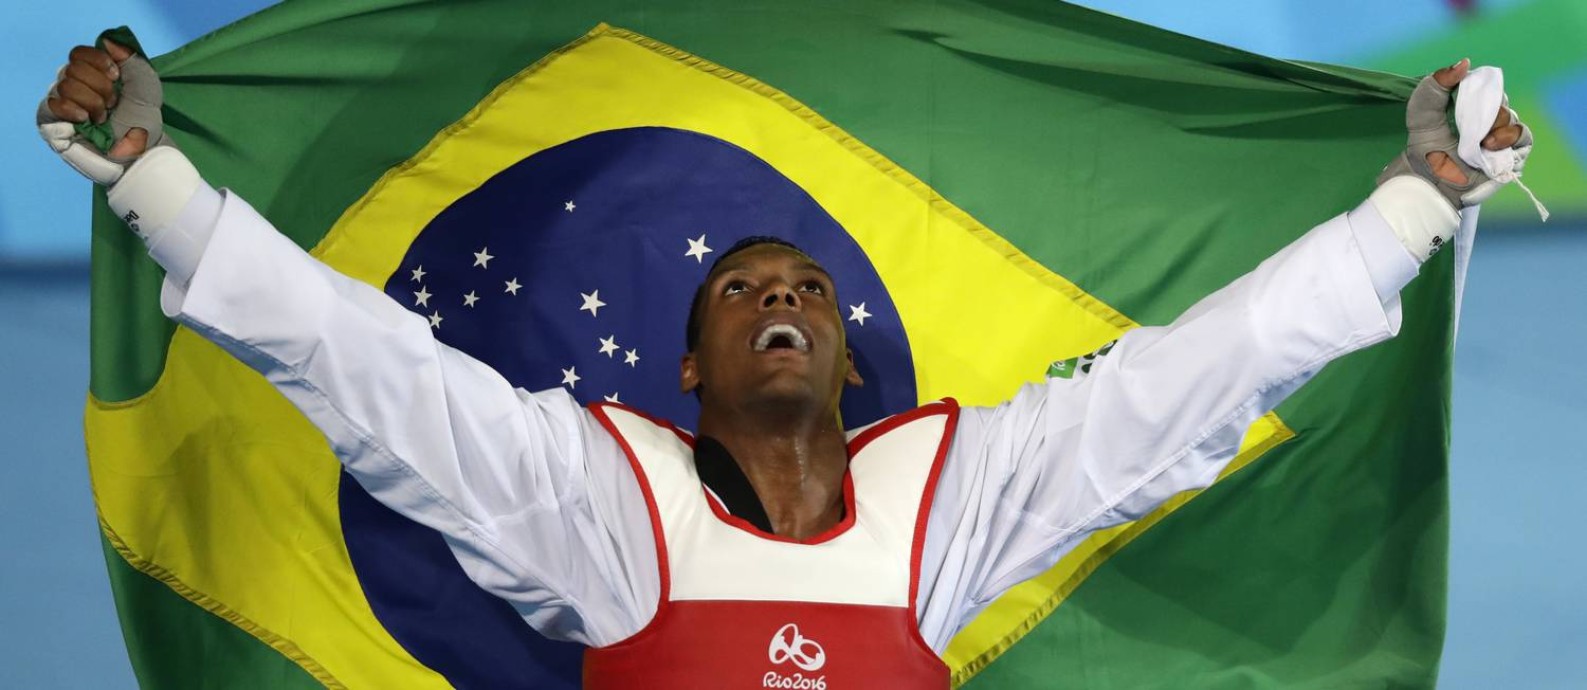 Maicon Siqueira comemora após conquistar a medalha de bronze Foto: Robert F. Bukaty / AP